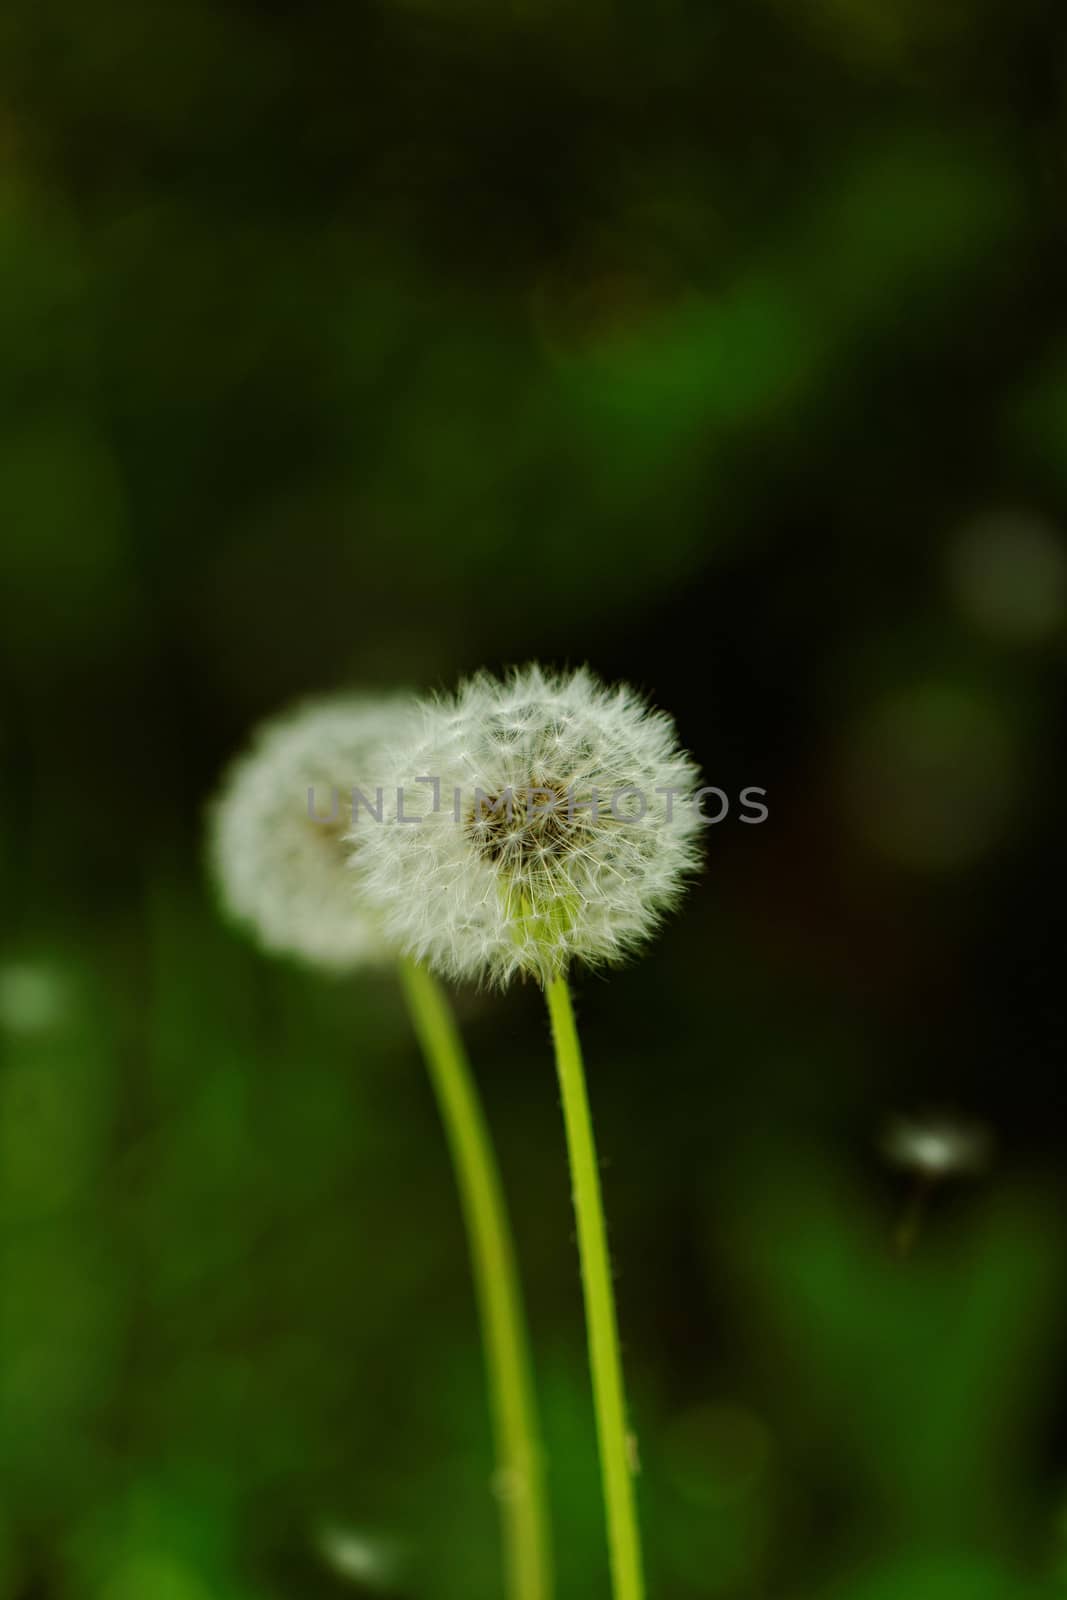 close-up of a dandelion flower